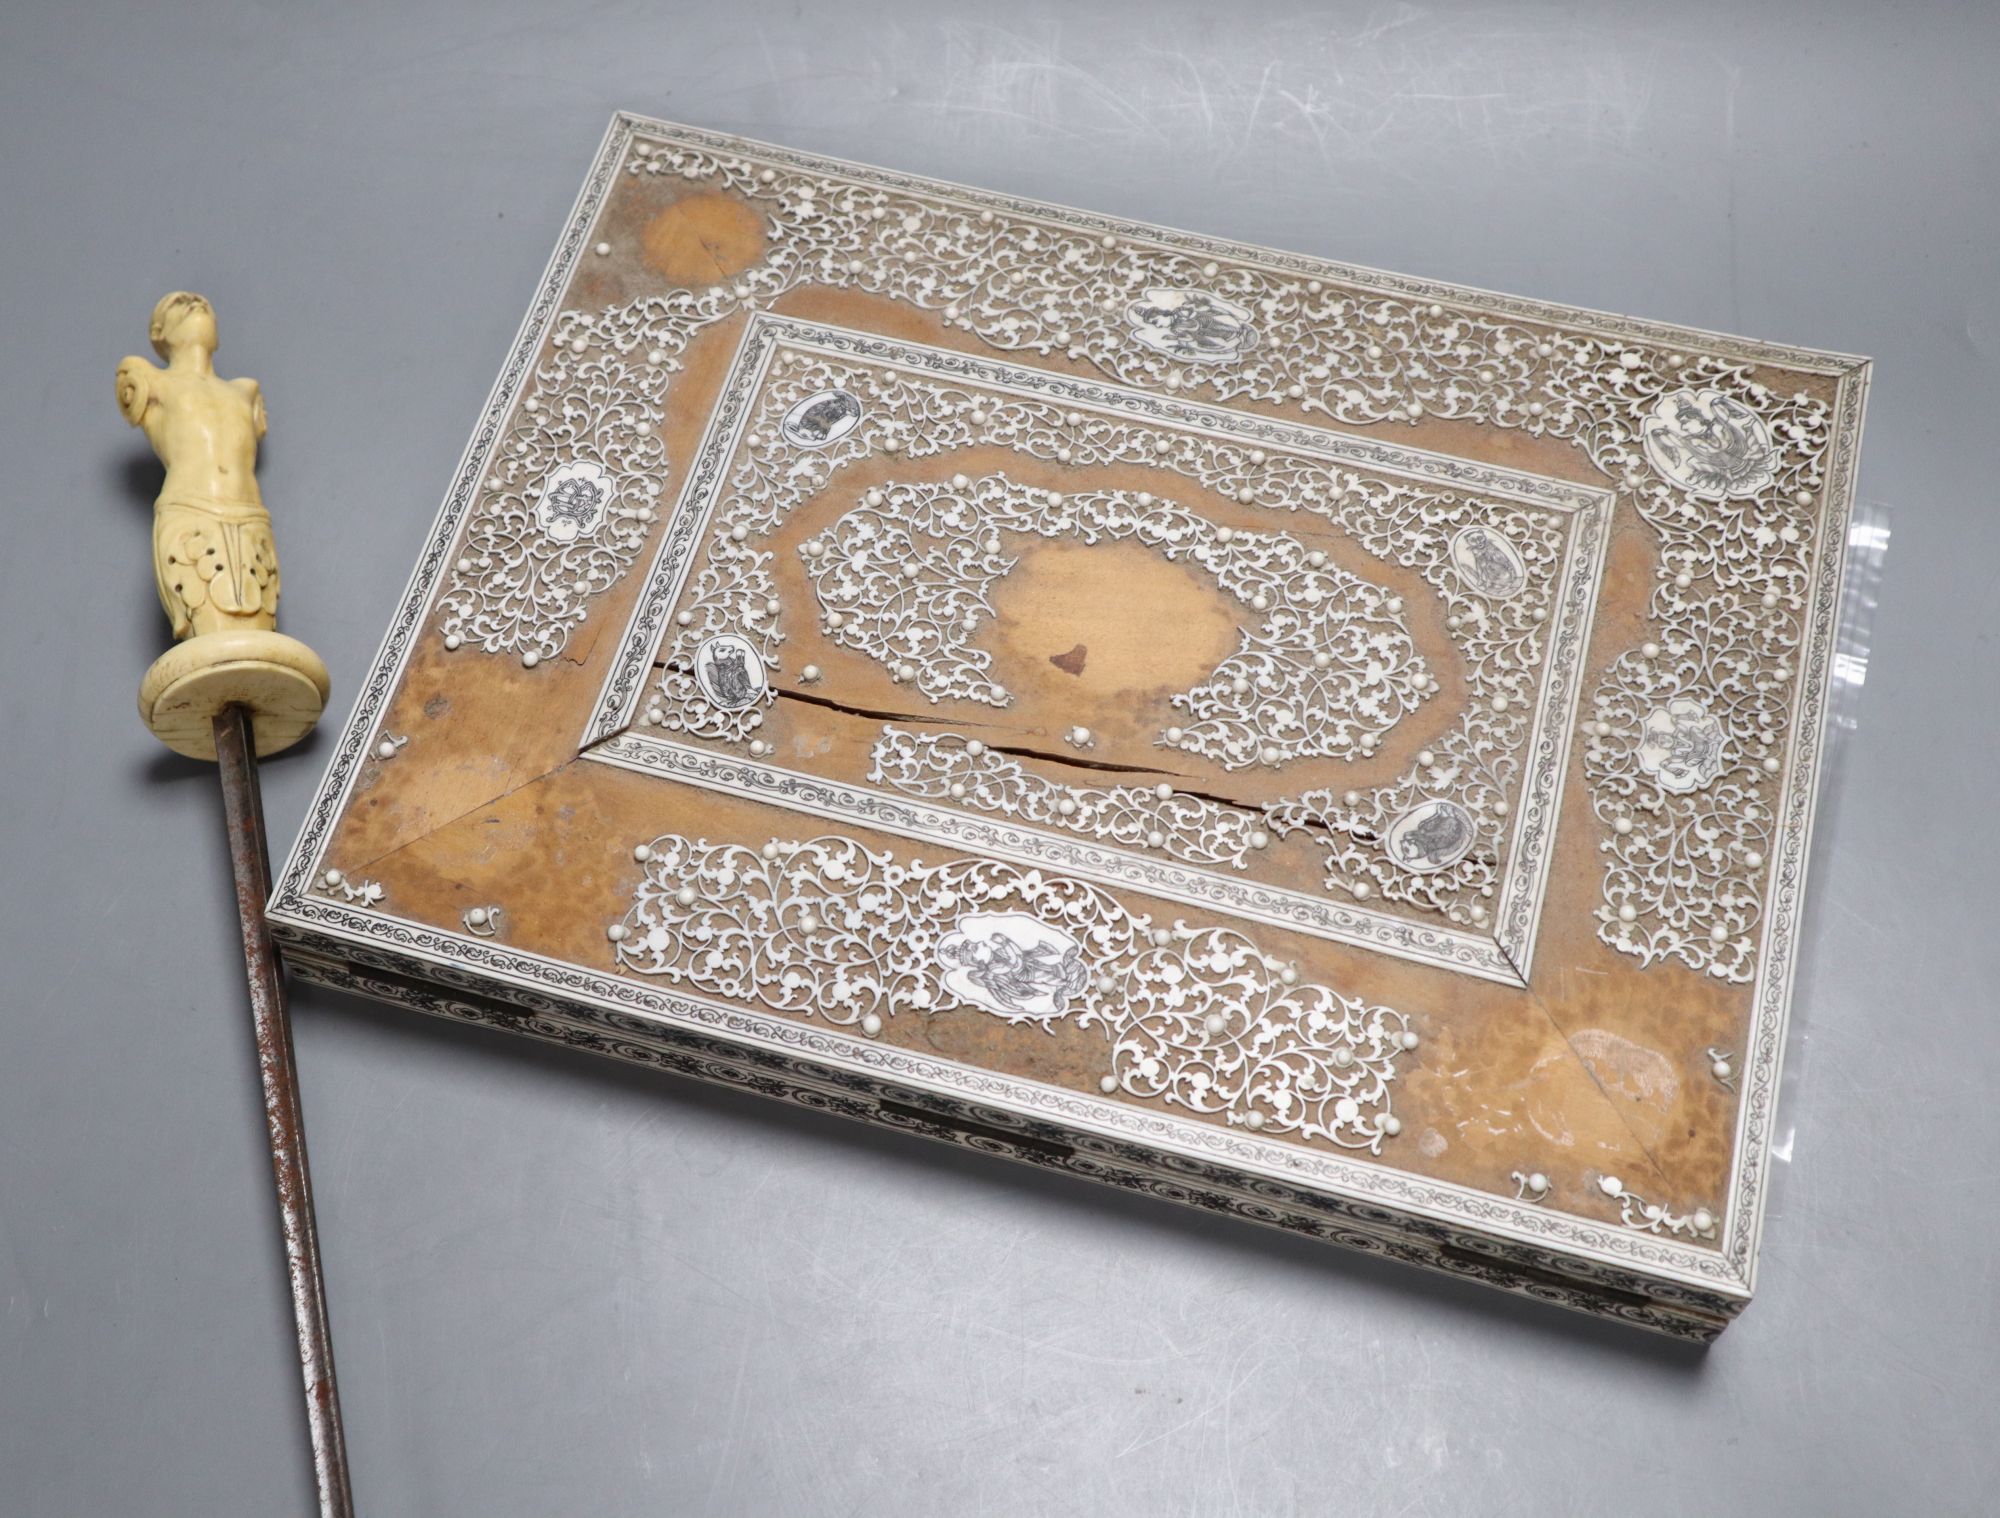 An 18th century German or Italian ivory hilt and guard and a 19th century Southern Indian ivory and sandalwood blotter pad